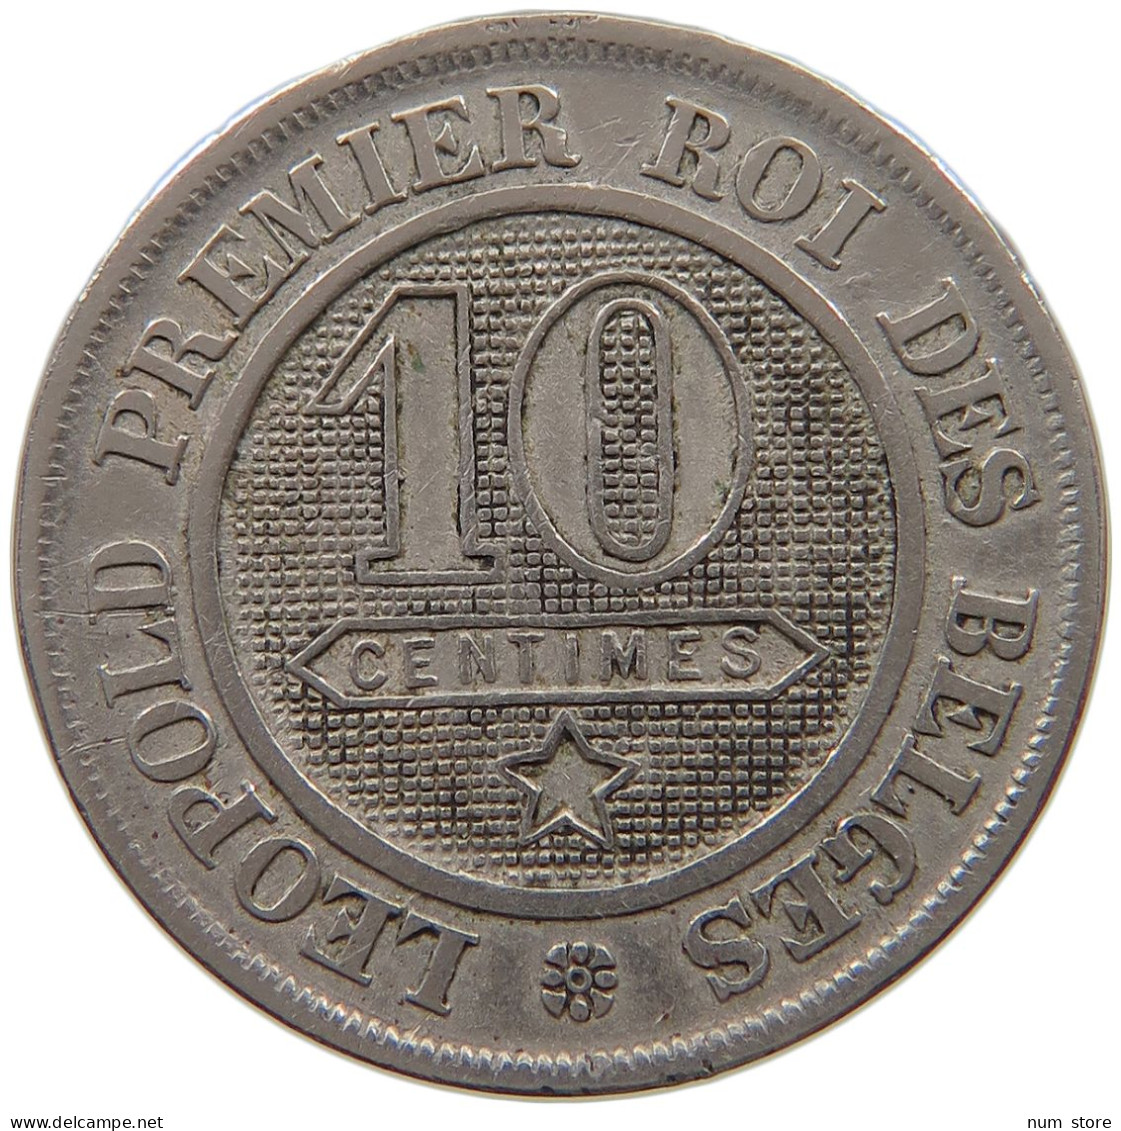 BELGIUM 10 CENTIMES 1862 #a072 0553 - 10 Cent